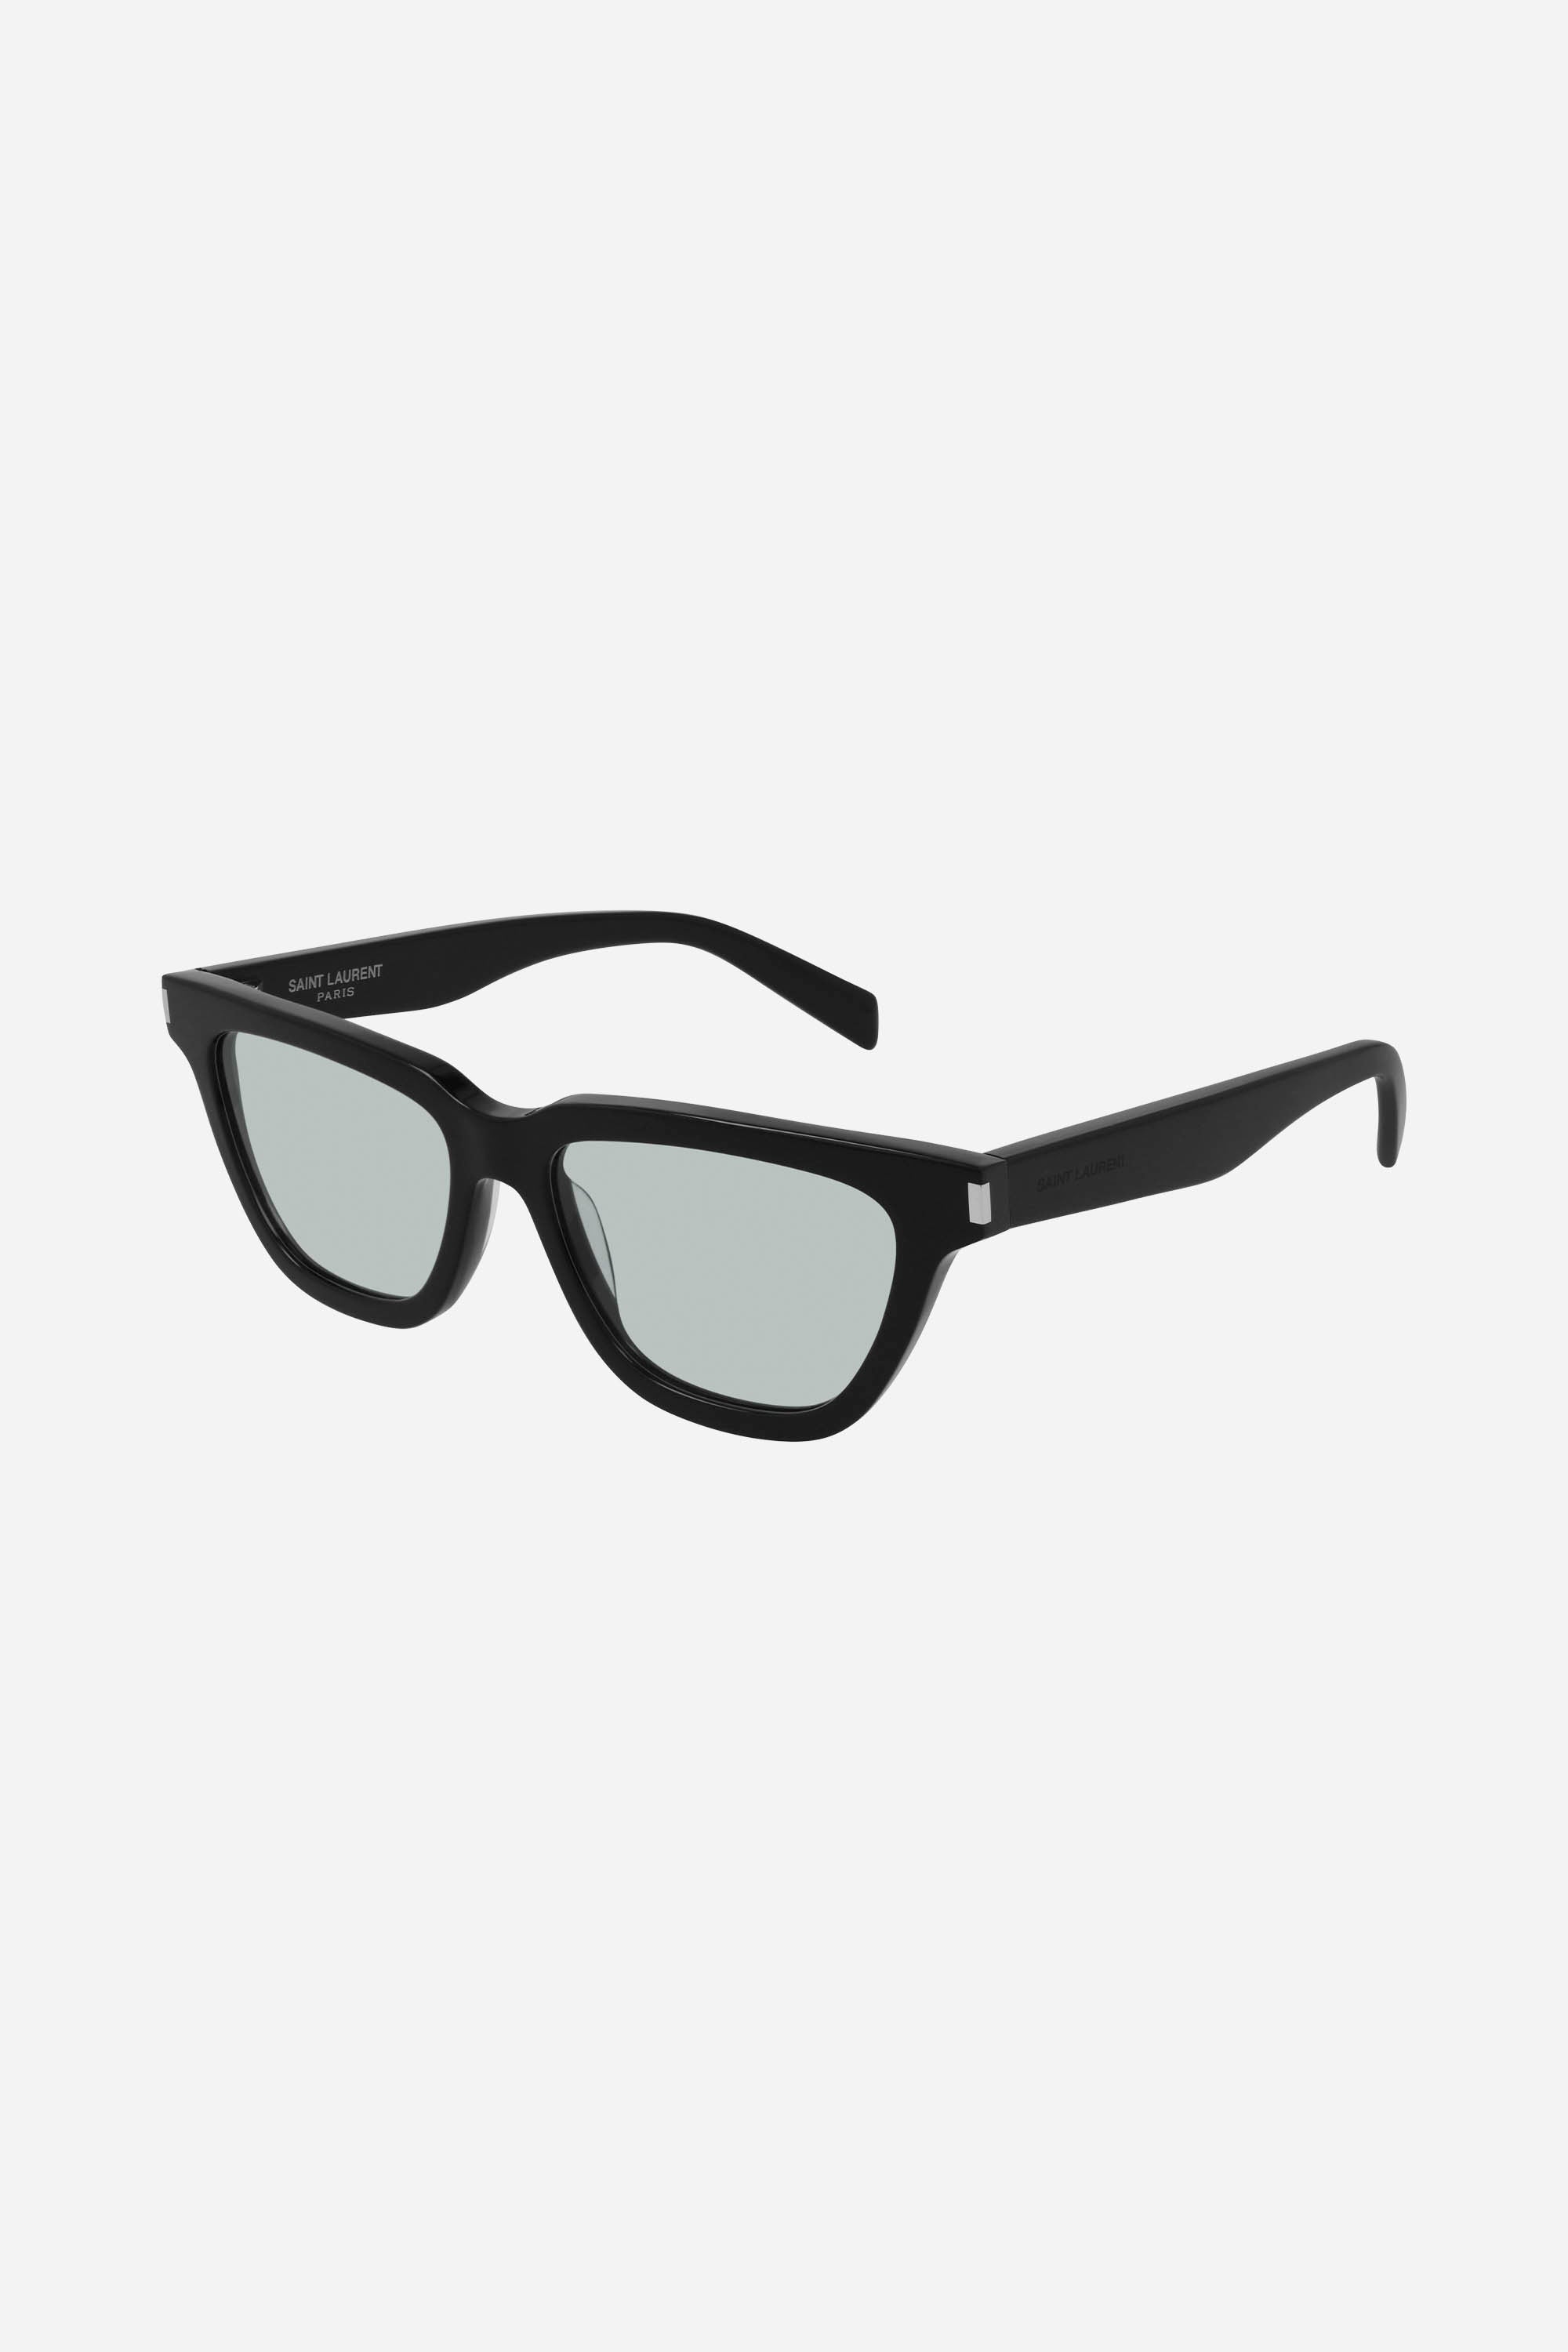 Saint Laurent SULPICE angular cat-eye UNISEX sunglasses with green lenses - Eyewear Club